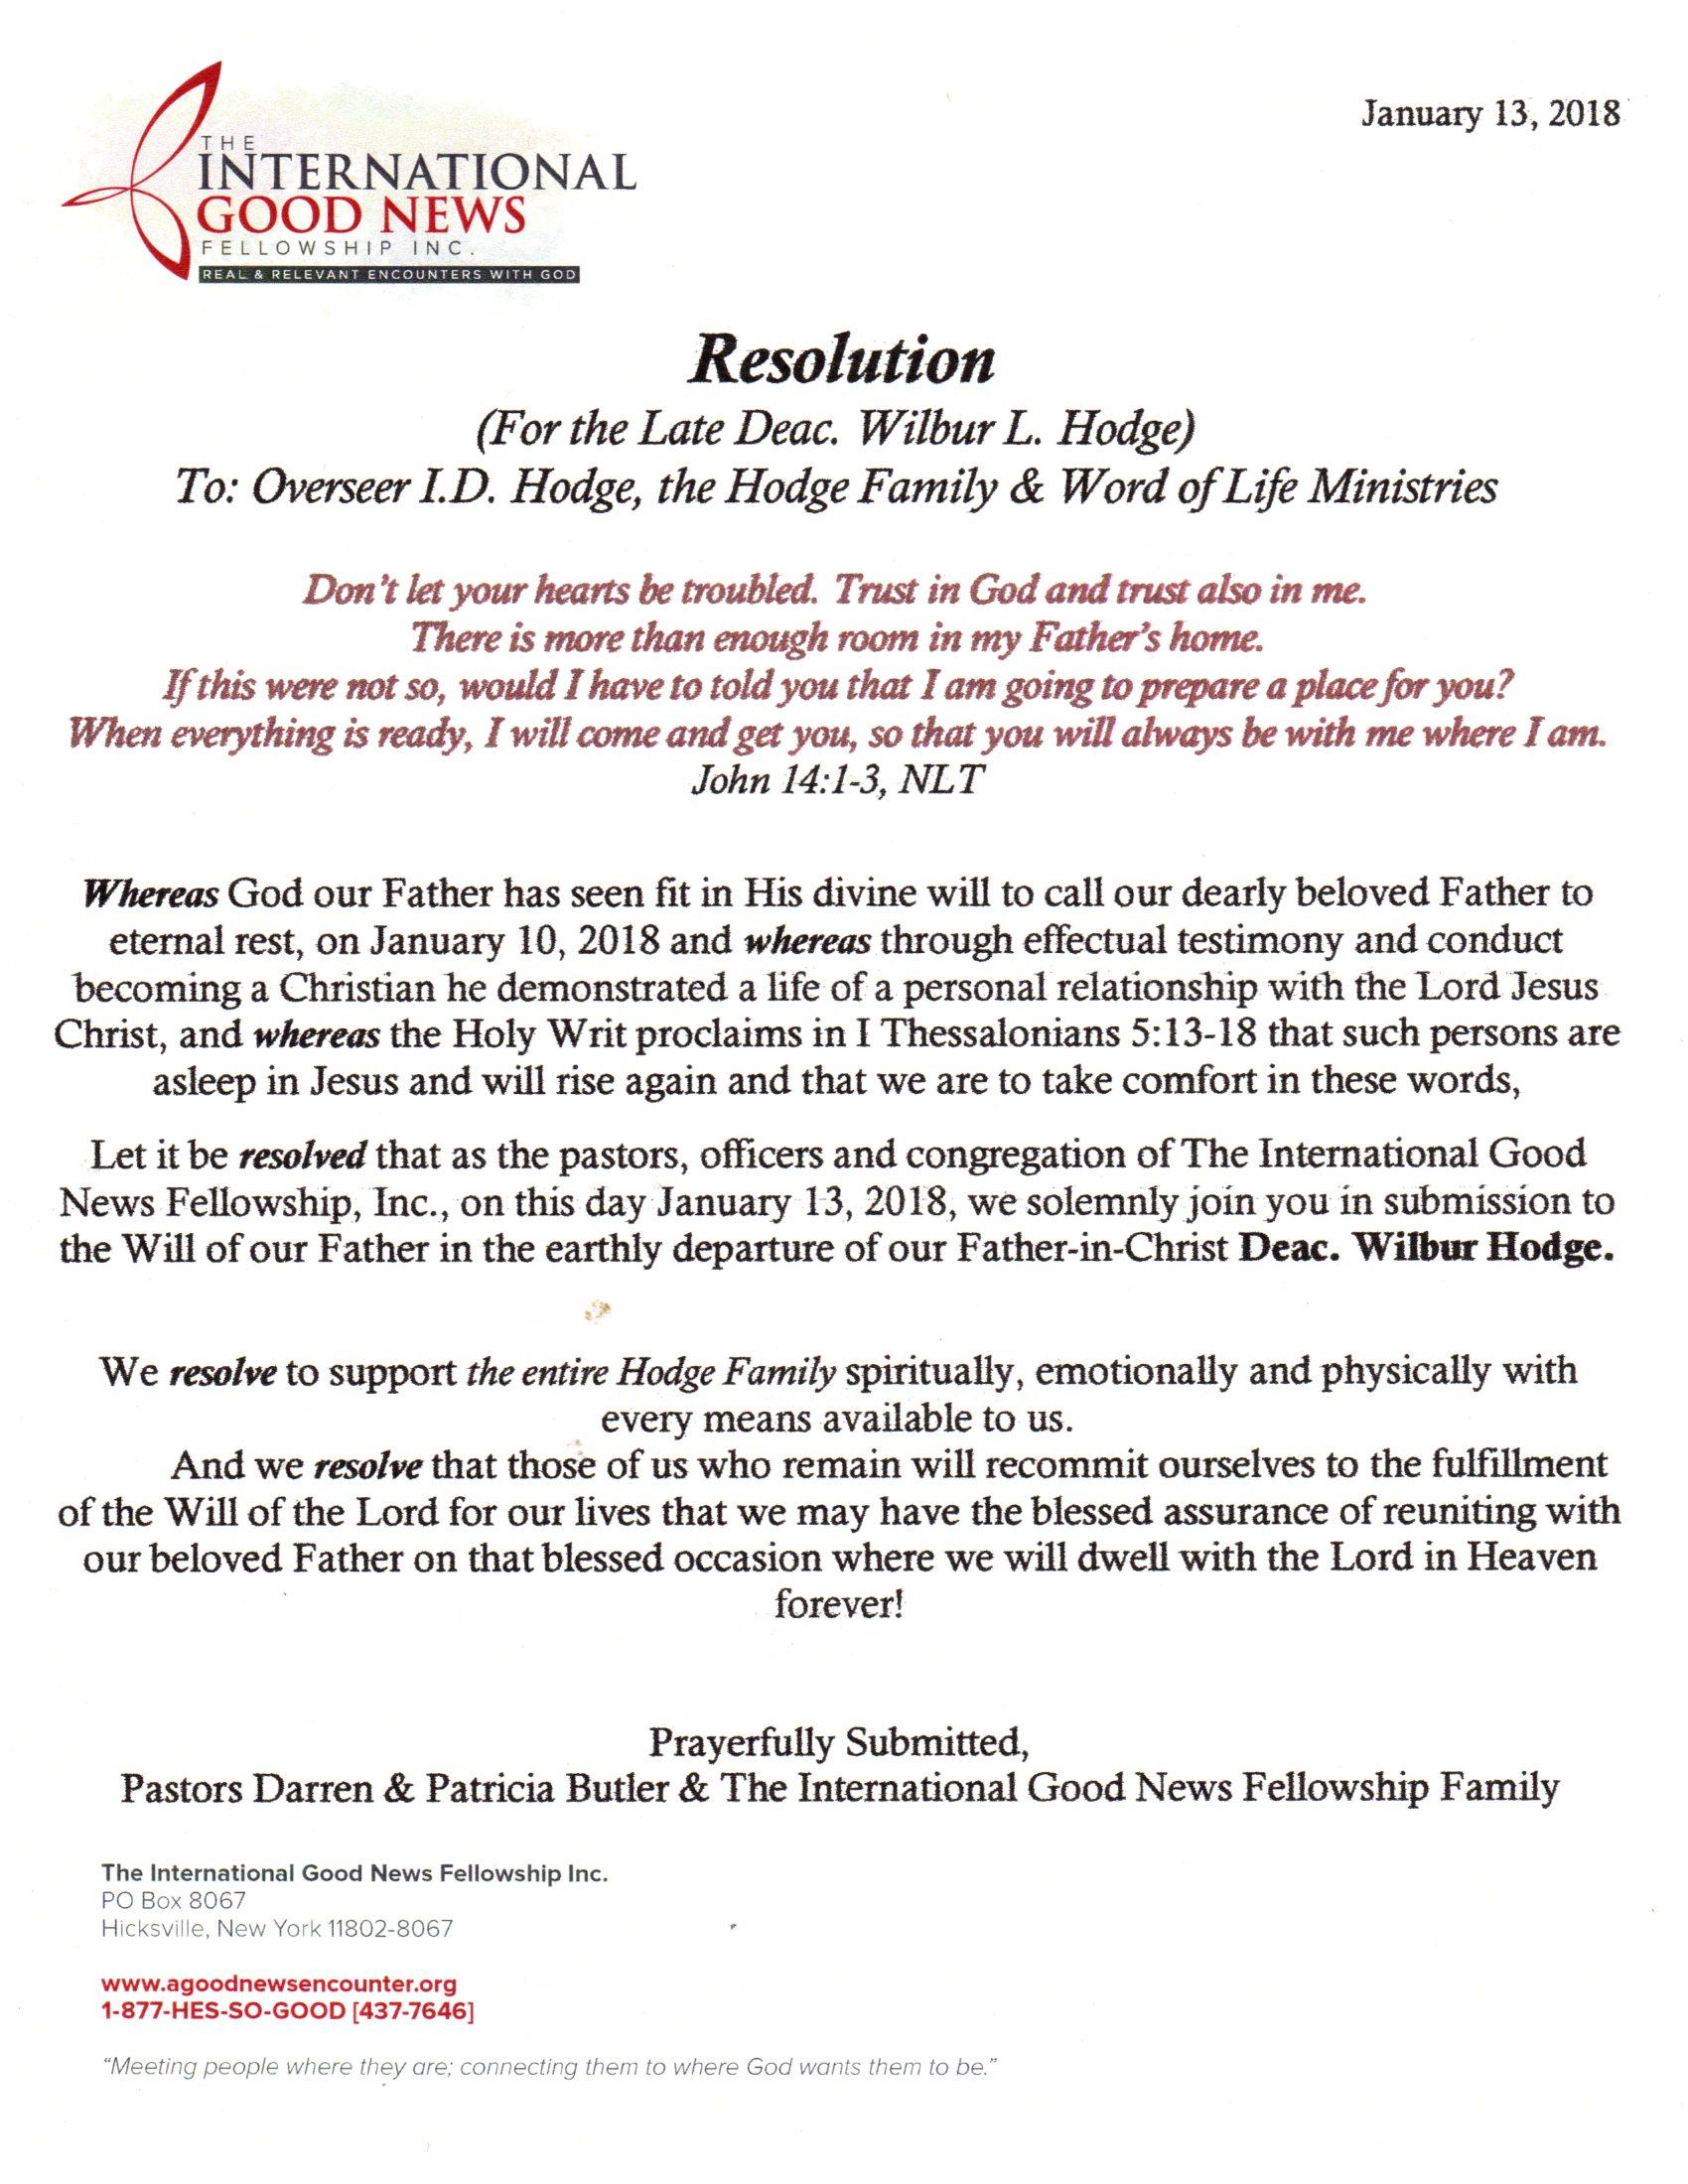 printable-church-funeral-resolution-pdf-calendar-of-national-days